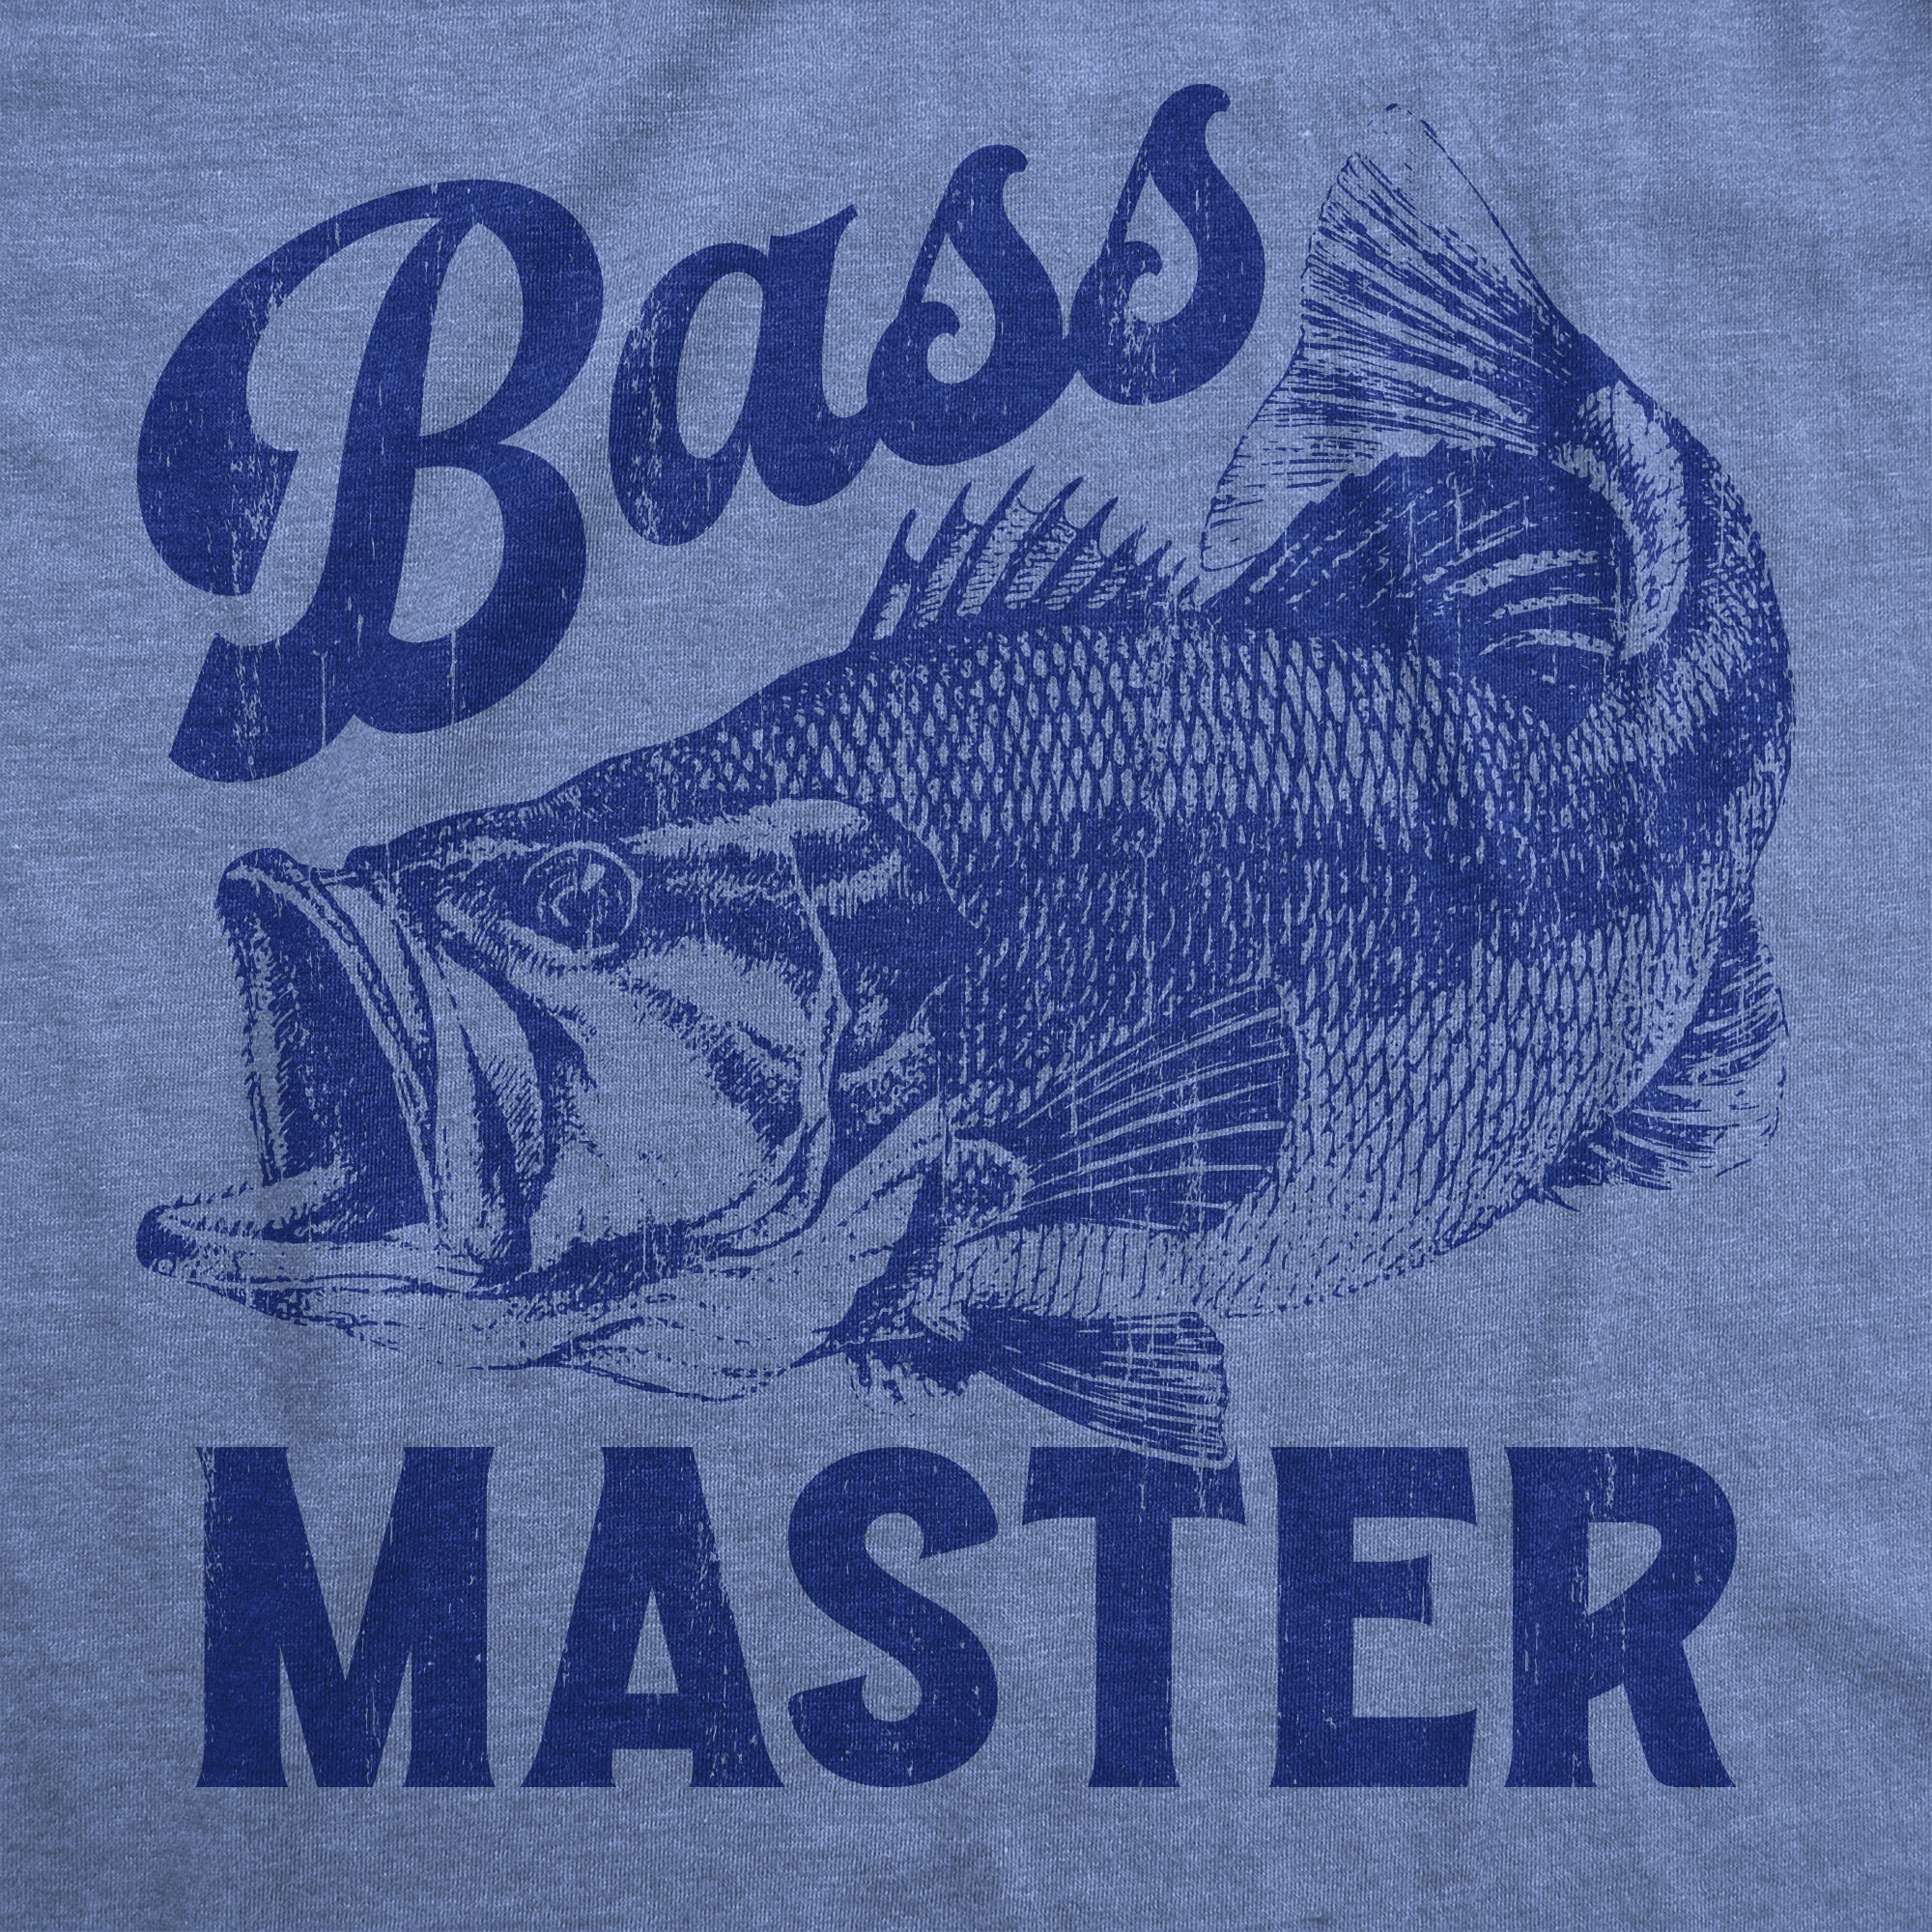 Mens Bass Master T Shirt Funny Sarcastic Fishing Professional Fish